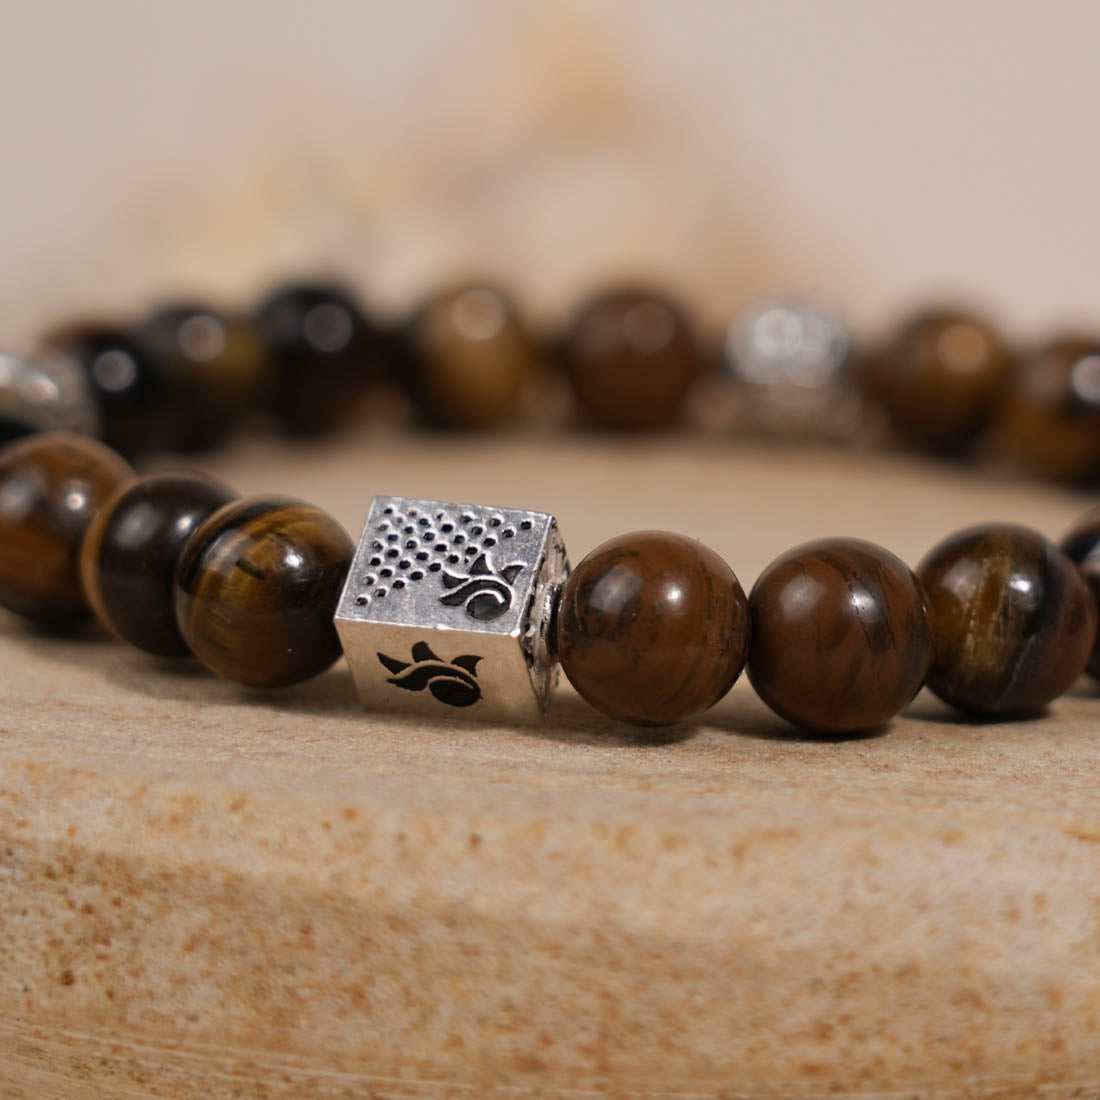 Tiger Eye Stone with Om Namah Shivay Silver Beads Bracelet